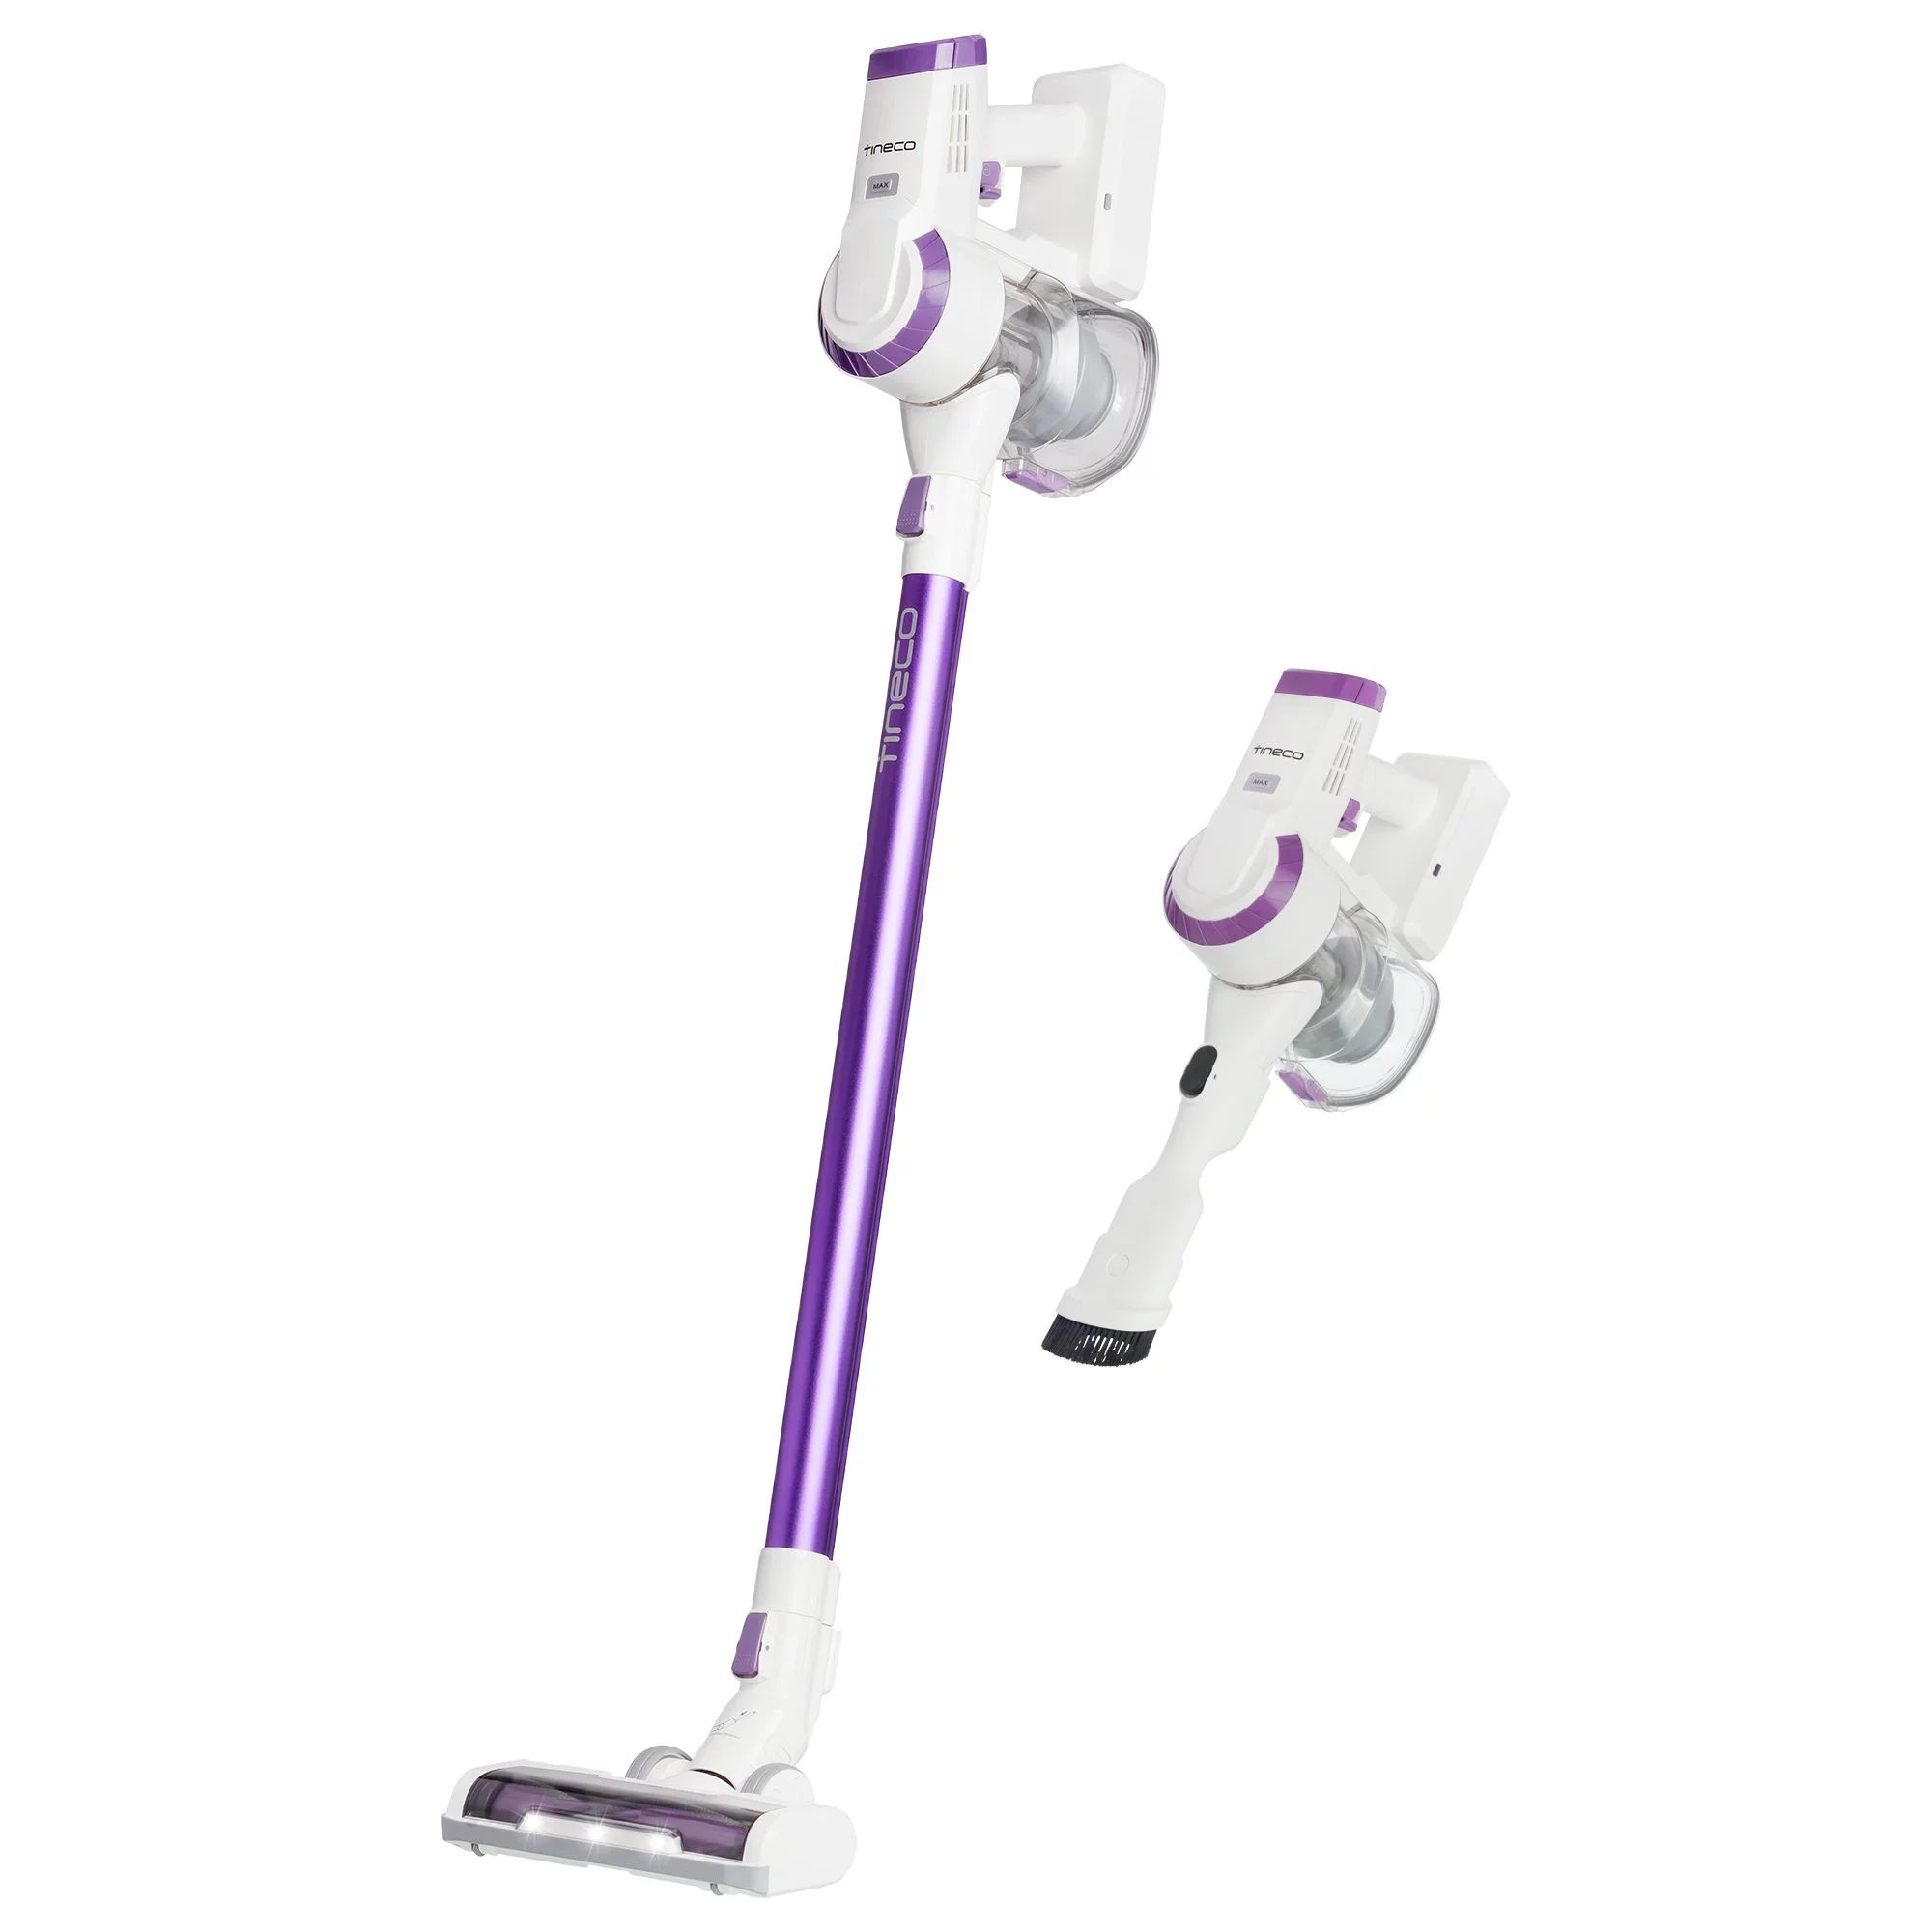 Tineco A10 Dash Lightweight Cordless Stick Vacuum Cleaner - Walmart.com | Walmart (US)